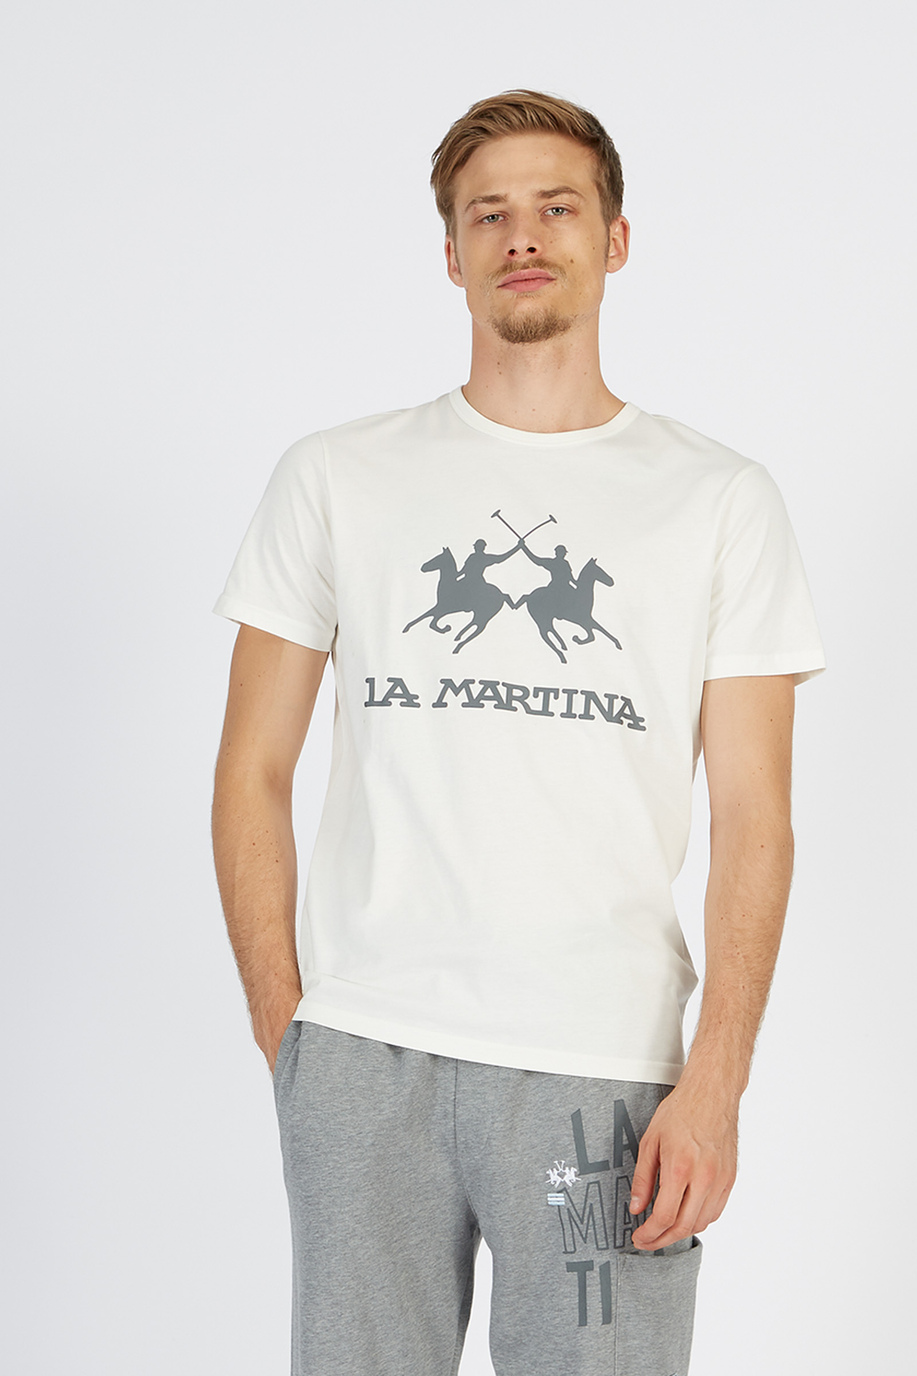 Men's T-shirts in a regular fit - Moreno - Monogrammed gifts for him | La Martina - Official Online Shop